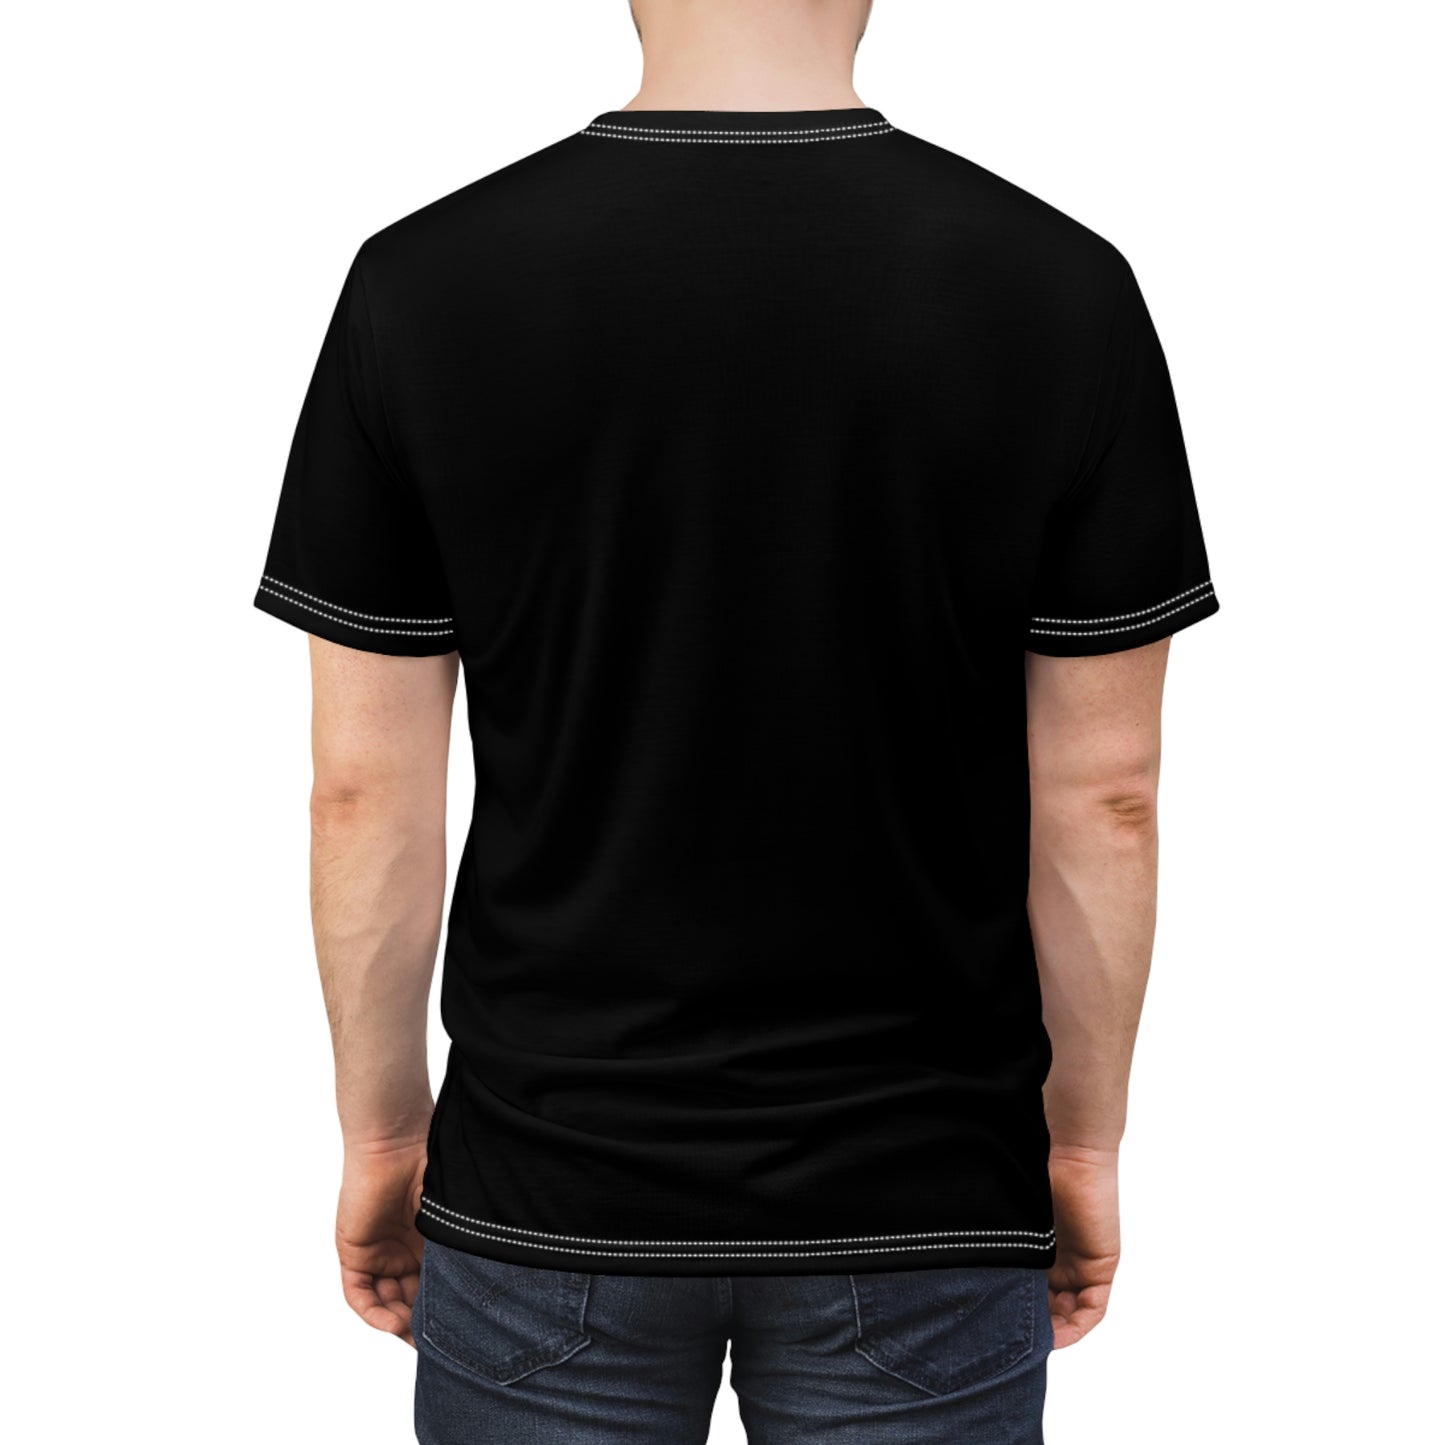 Dragon Sky - Unisex All-Over Print Cut & Sew T-Shirt